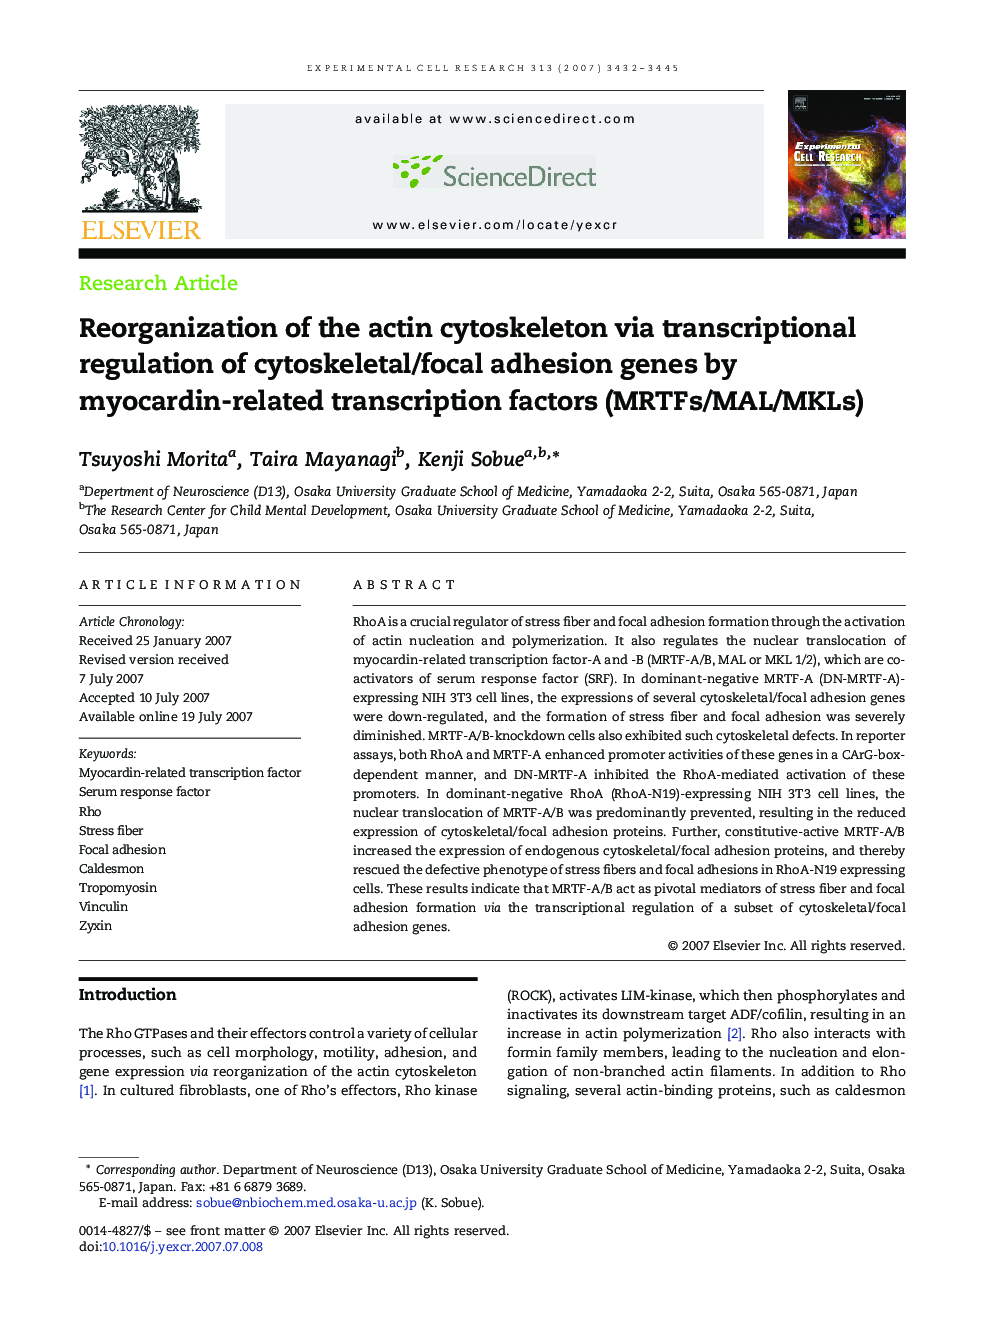 Reorganization of the actin cytoskeleton via transcriptional regulation of cytoskeletal/focal adhesion genes by myocardin-related transcription factors (MRTFs/MAL/MKLs)